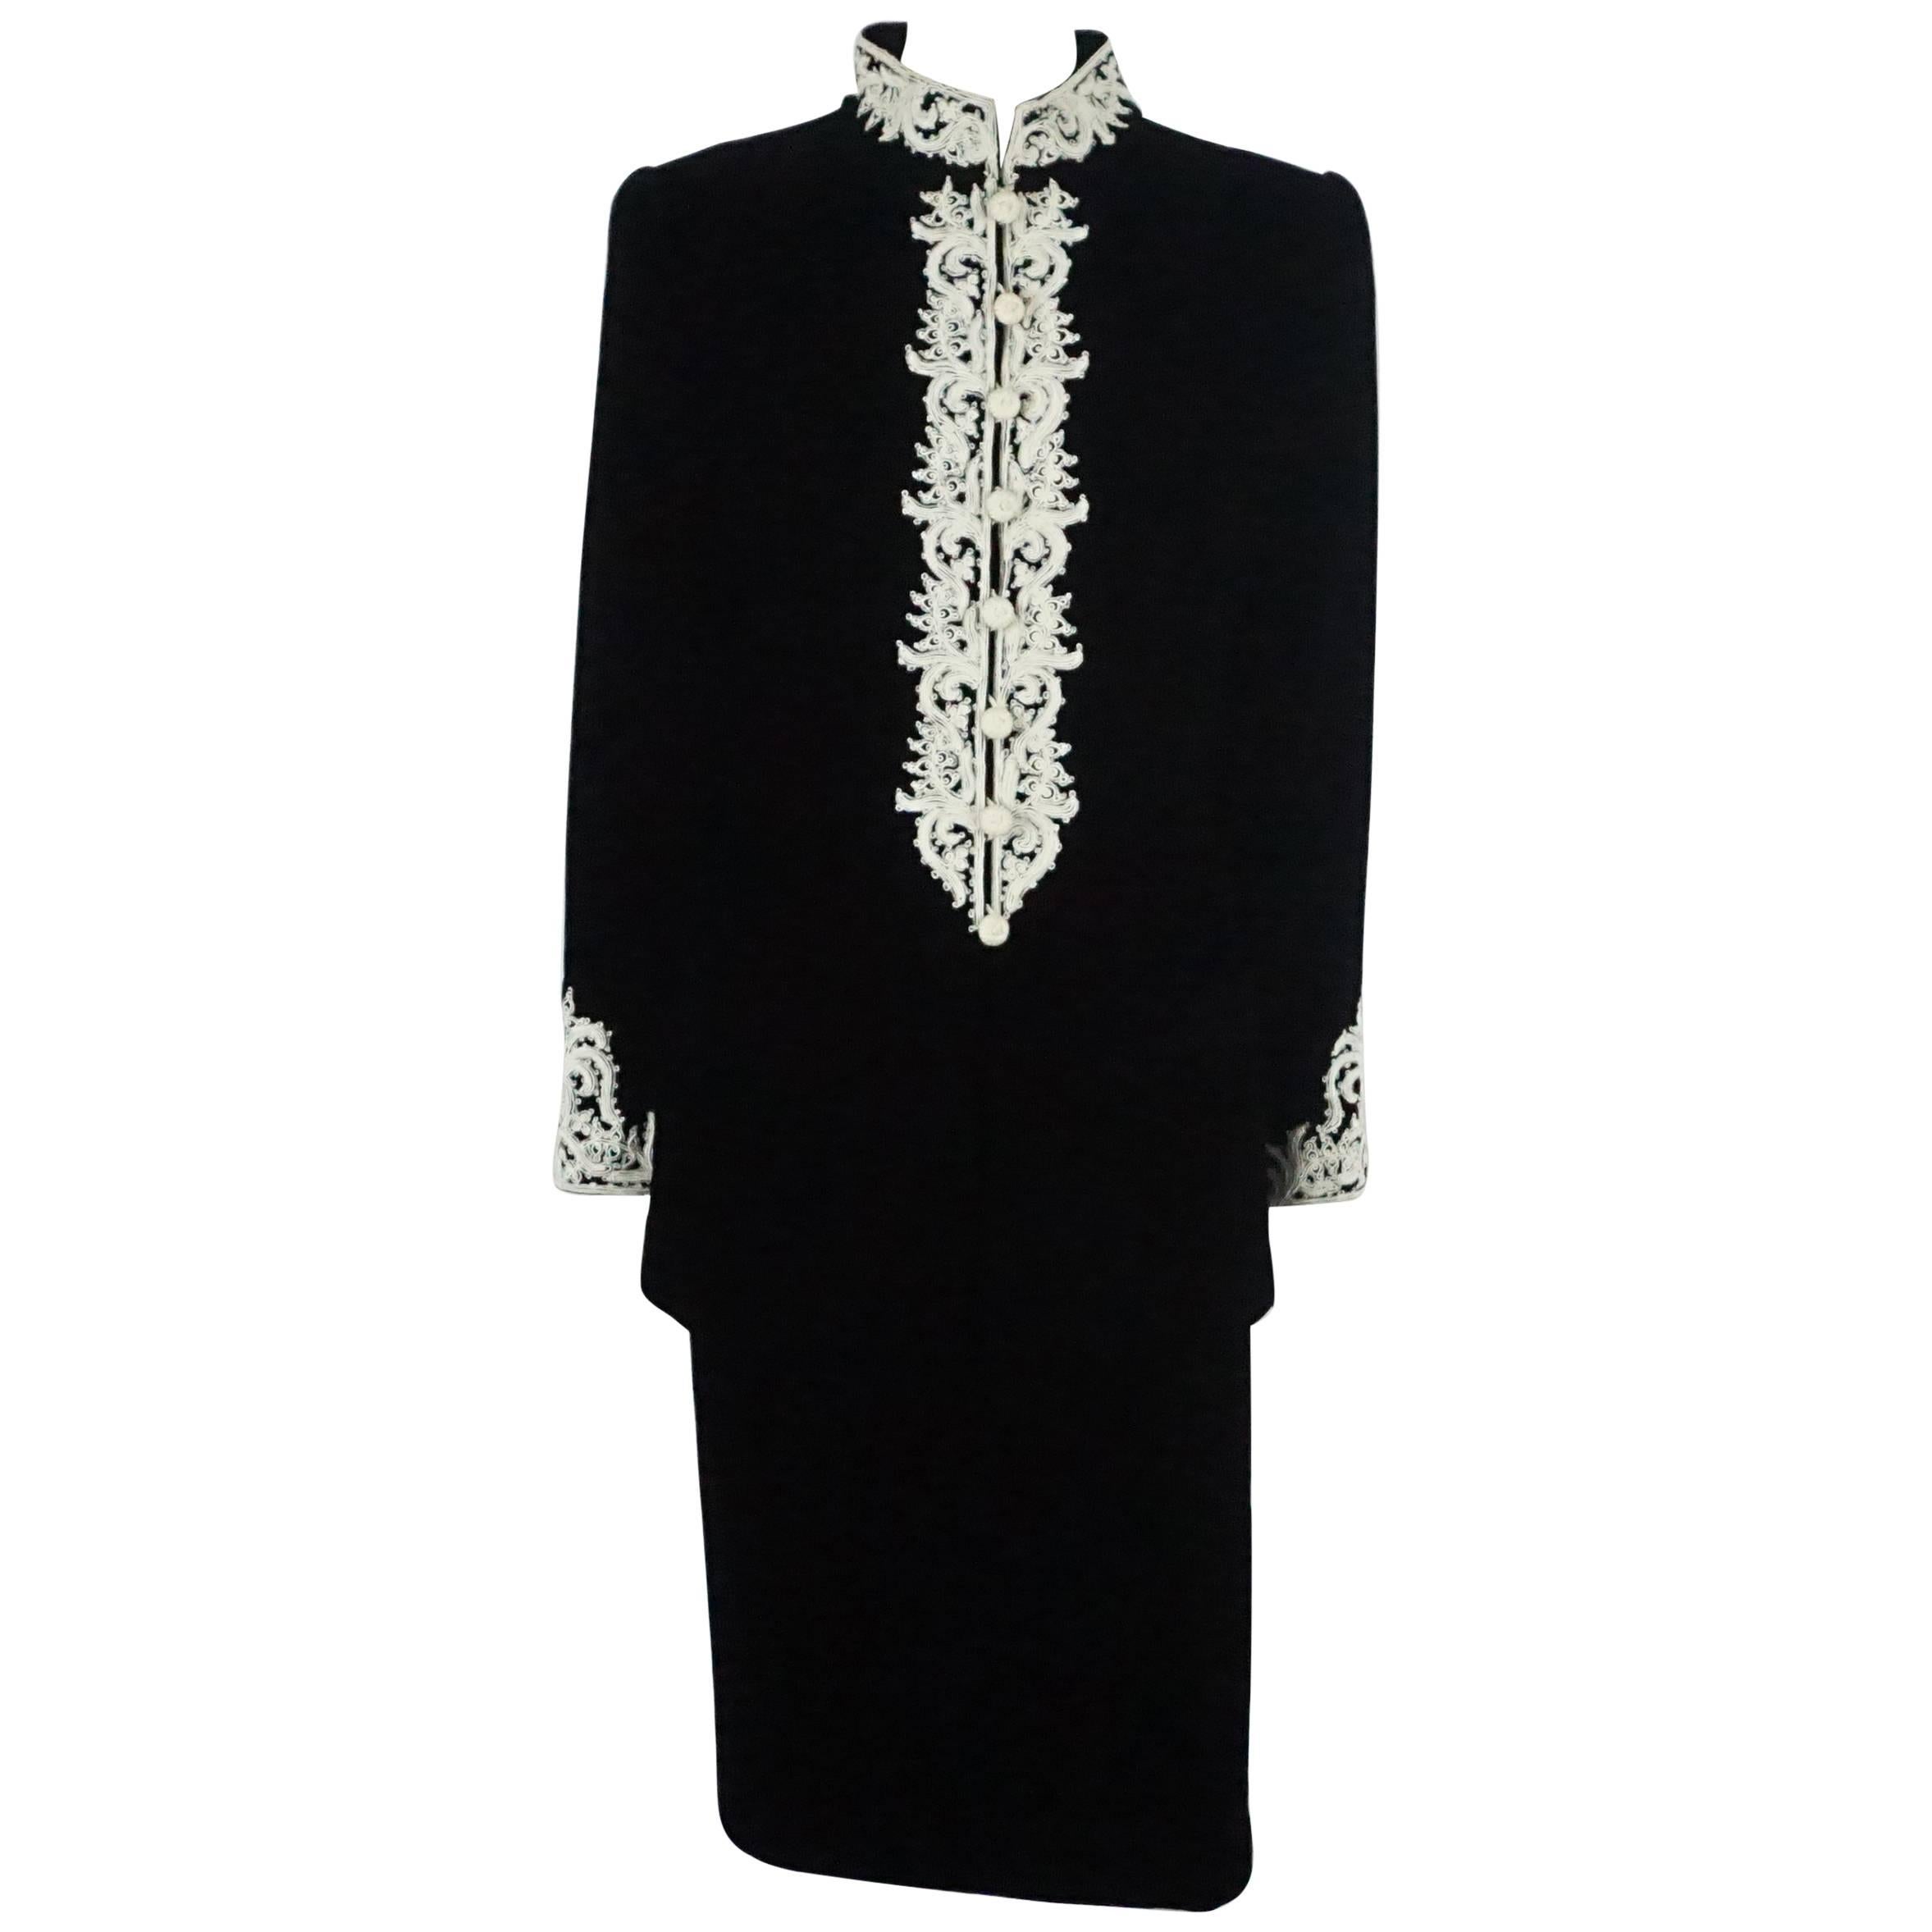 Oscar de la Renta - Costume jupe en velours noir avec broderie blanche - Taille 10 - 1990